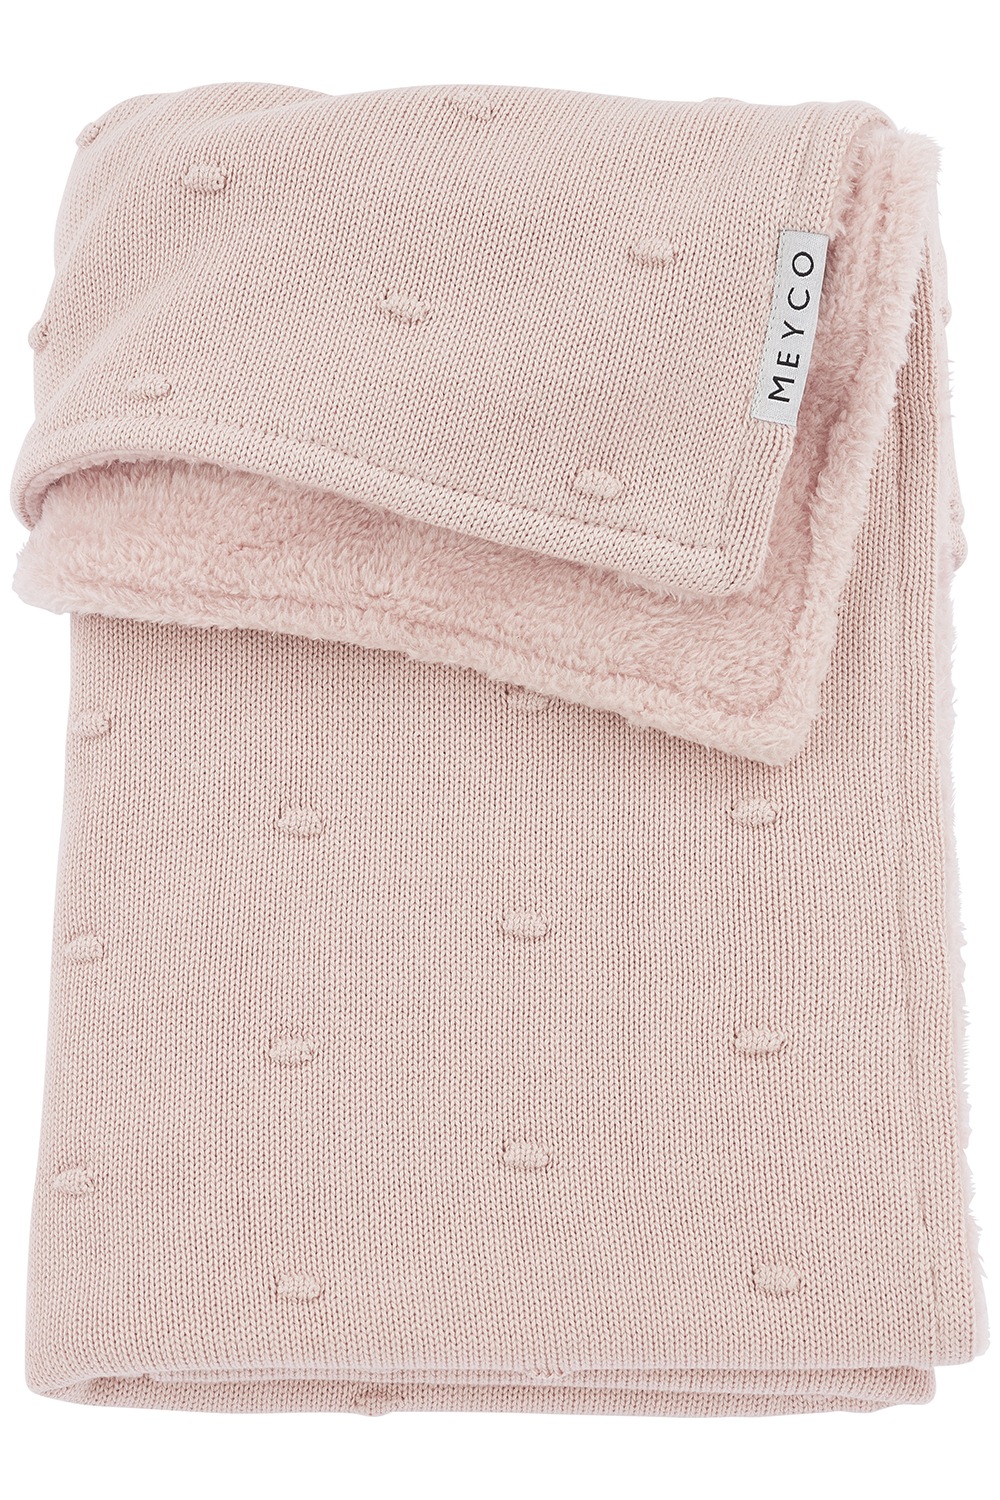 Cot Bed Blanket Mini Knots Teddy - Soft Pink - 100x150cm